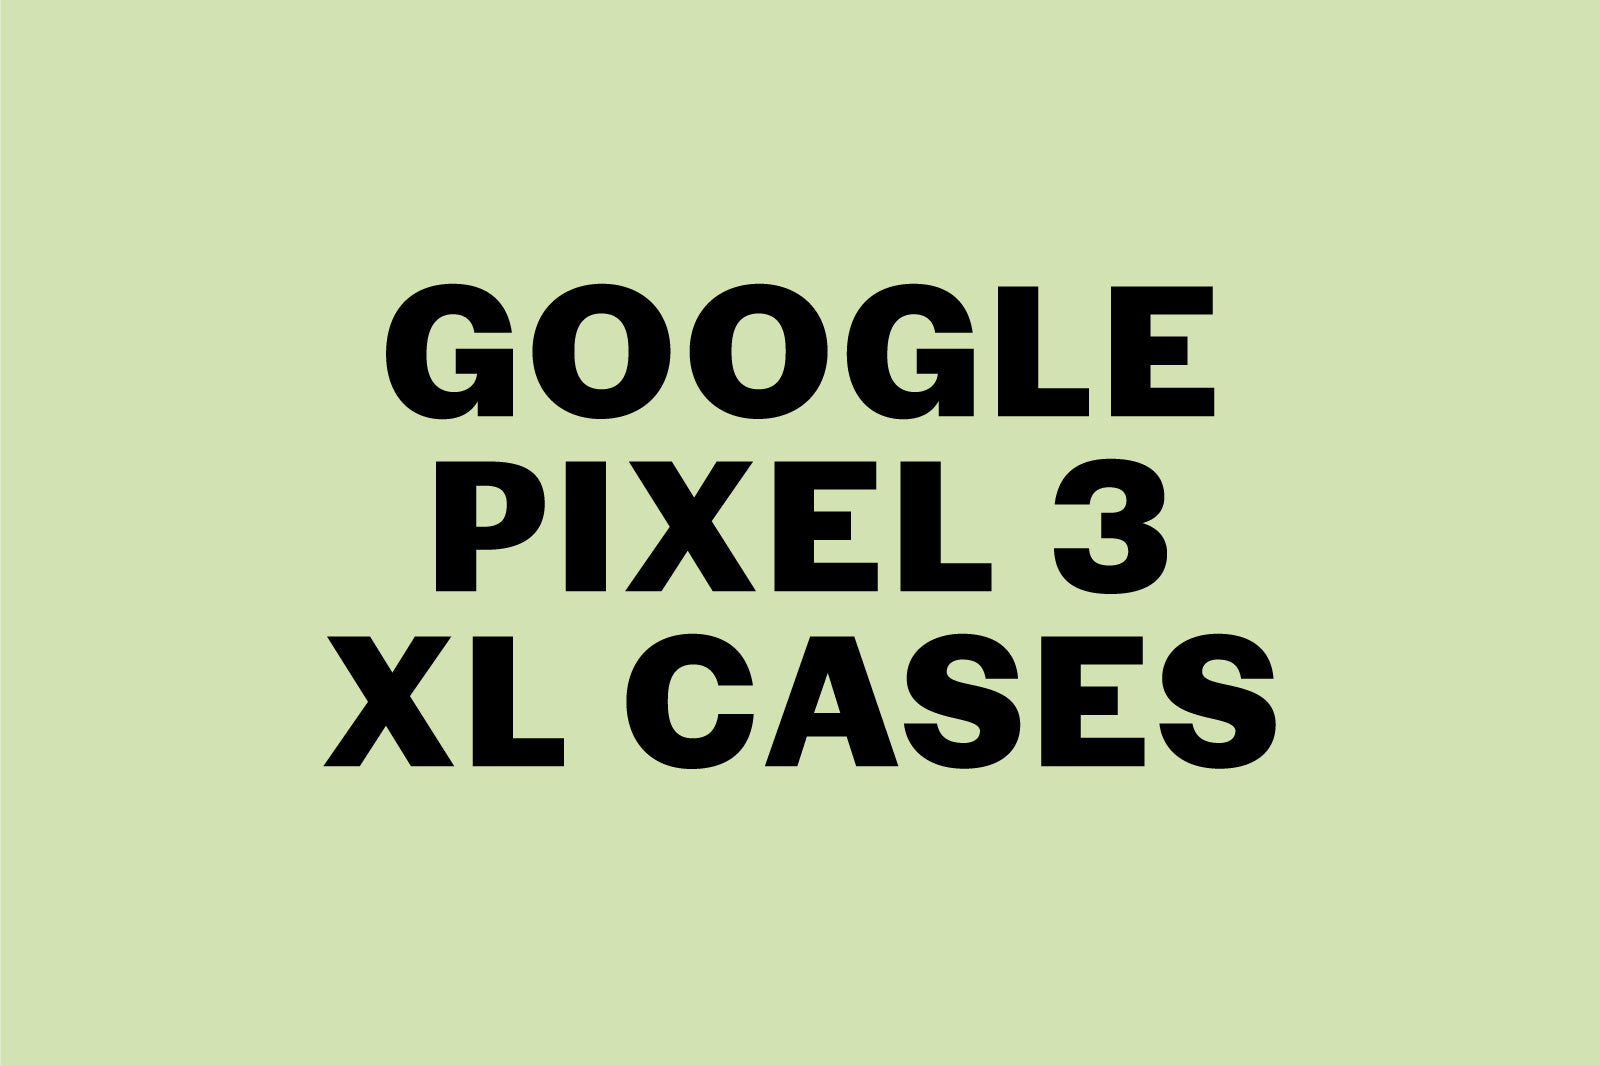 Google Pixel 3 XL Cases